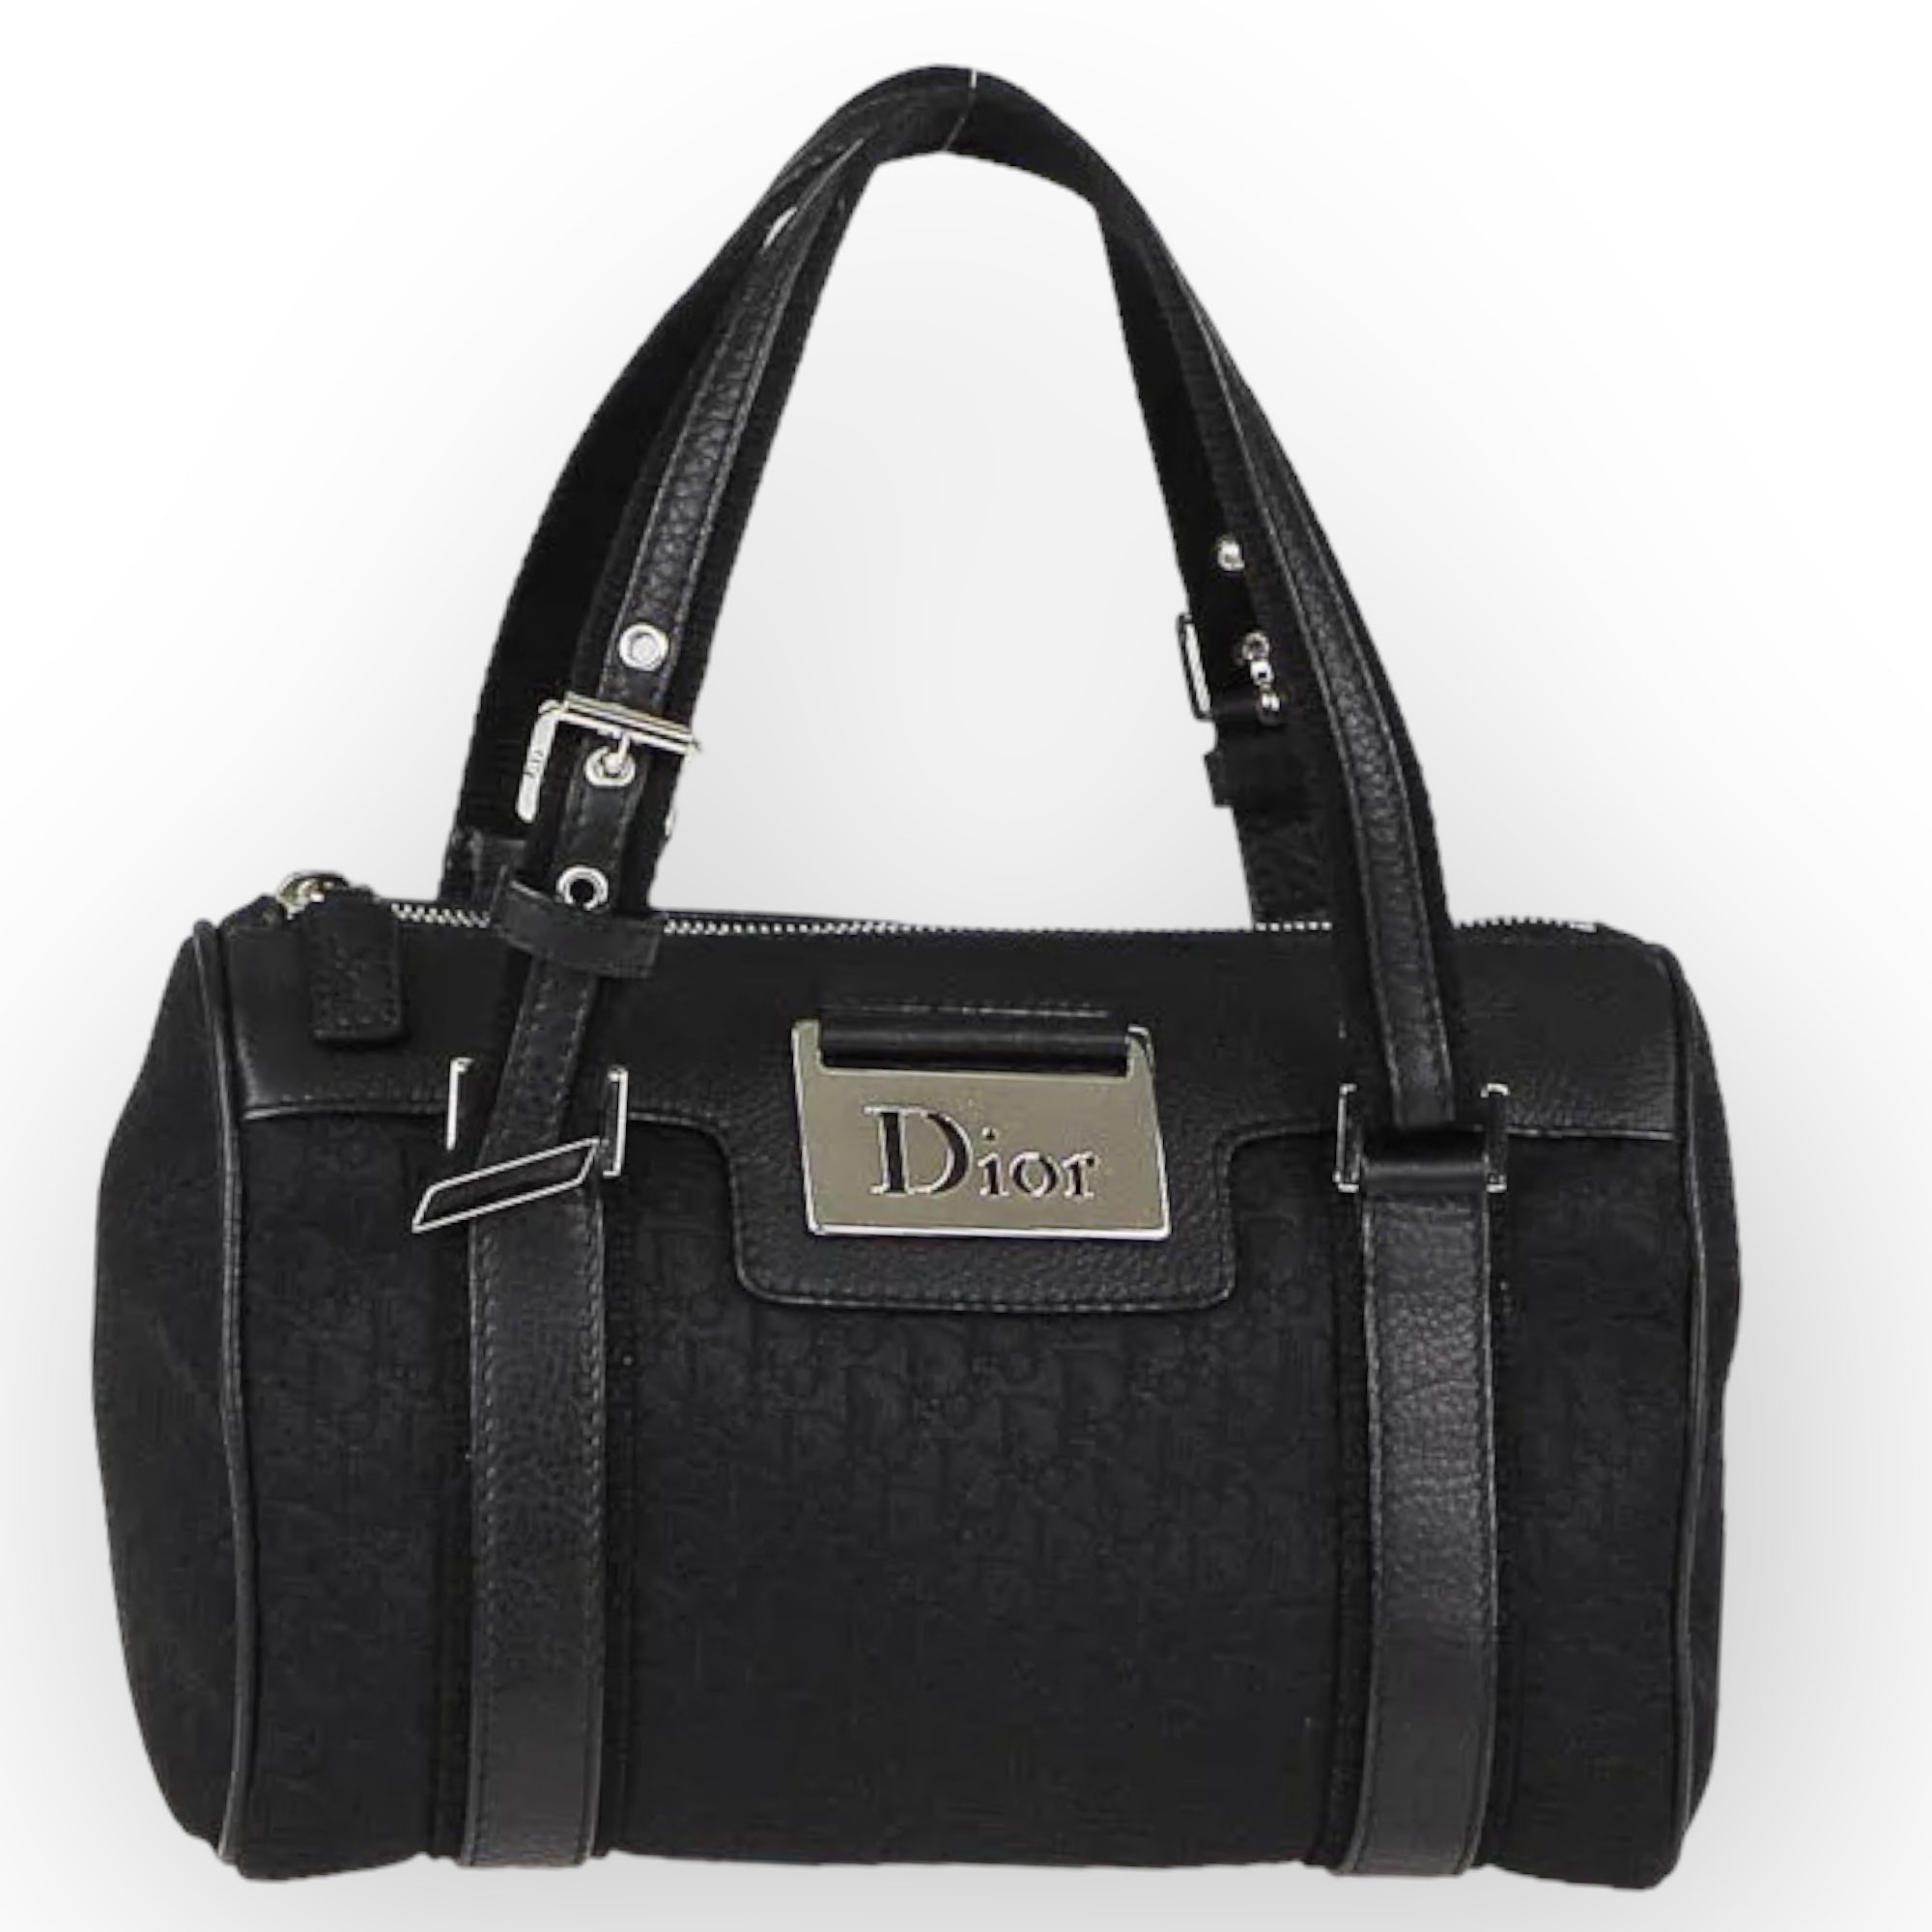 Dior Duffle -  UK